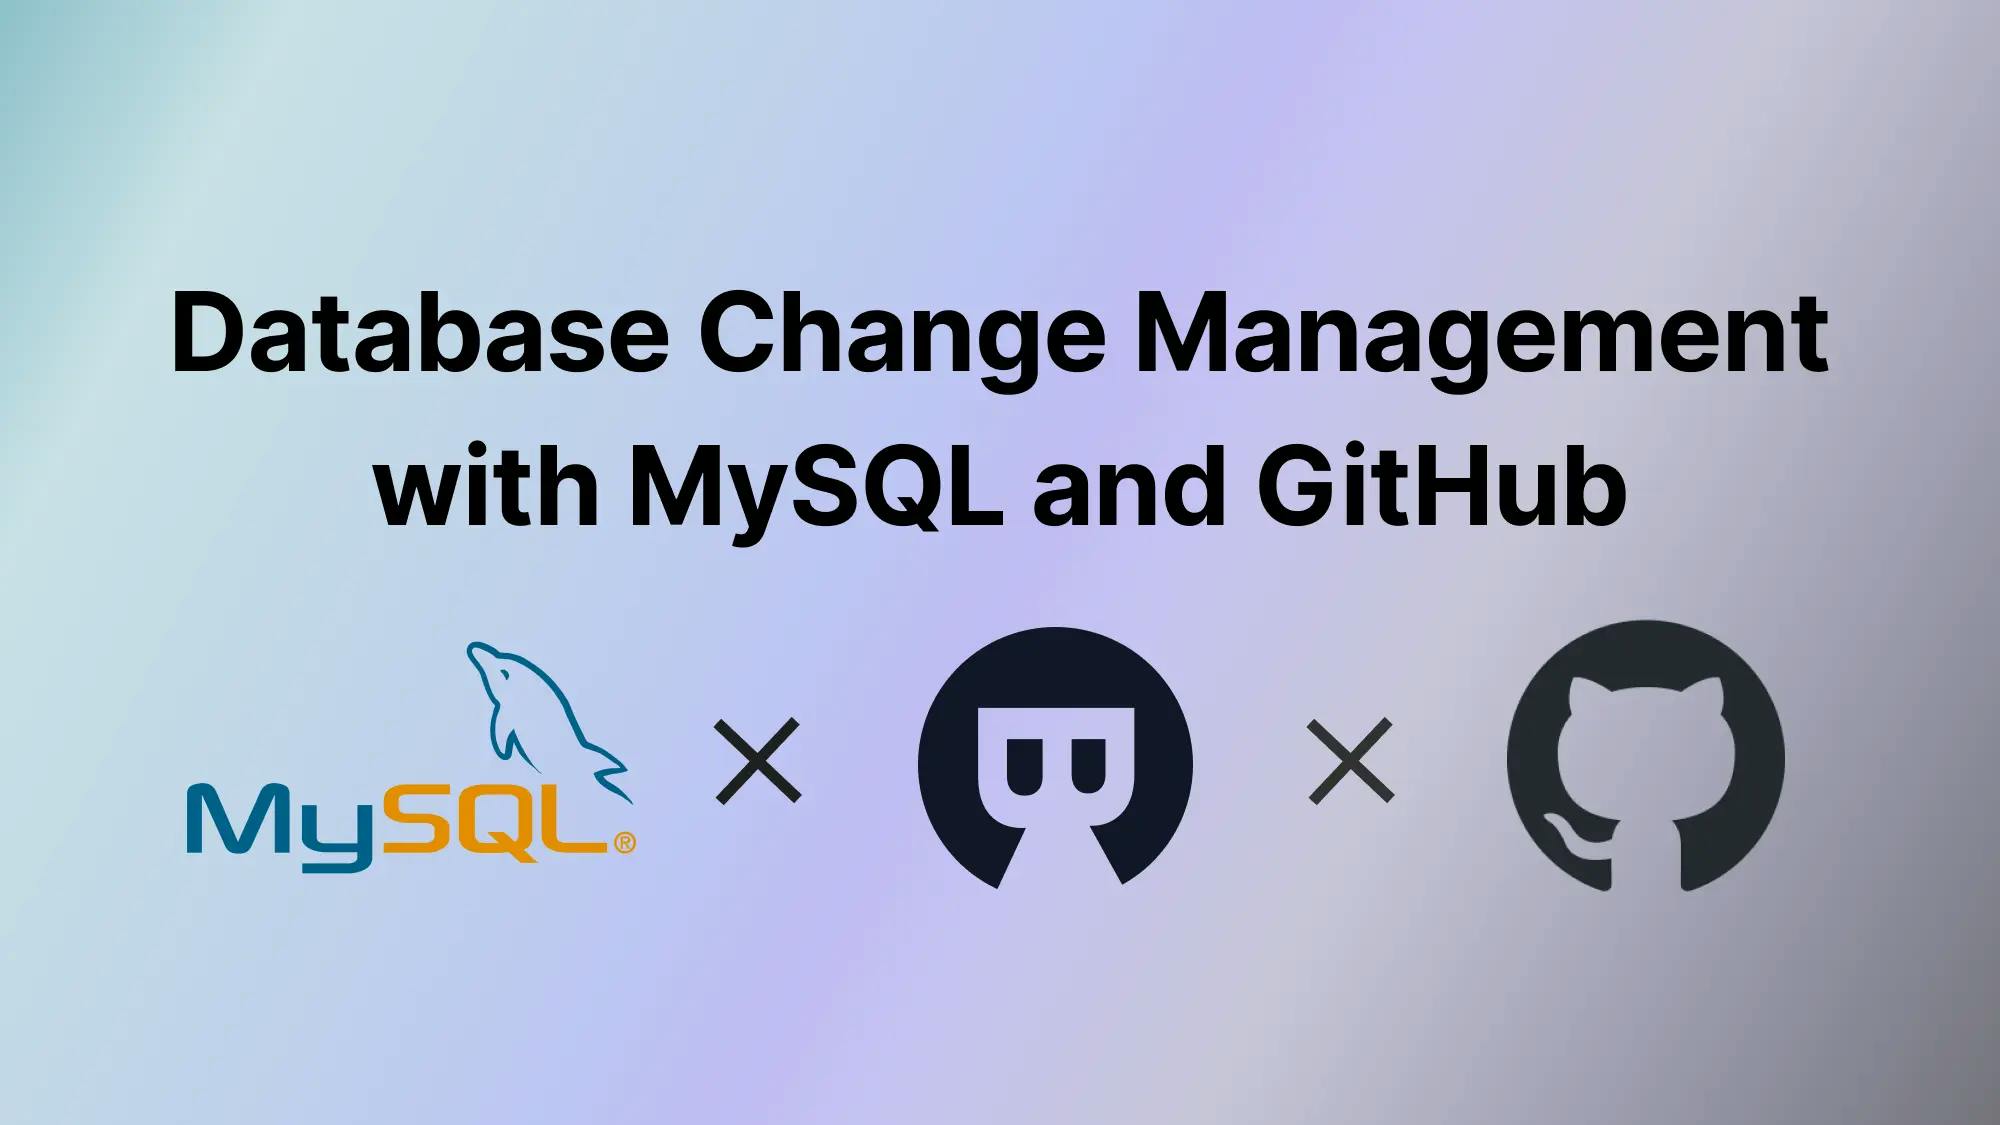 DevOps: Database Change Management with MySQL and GitHub